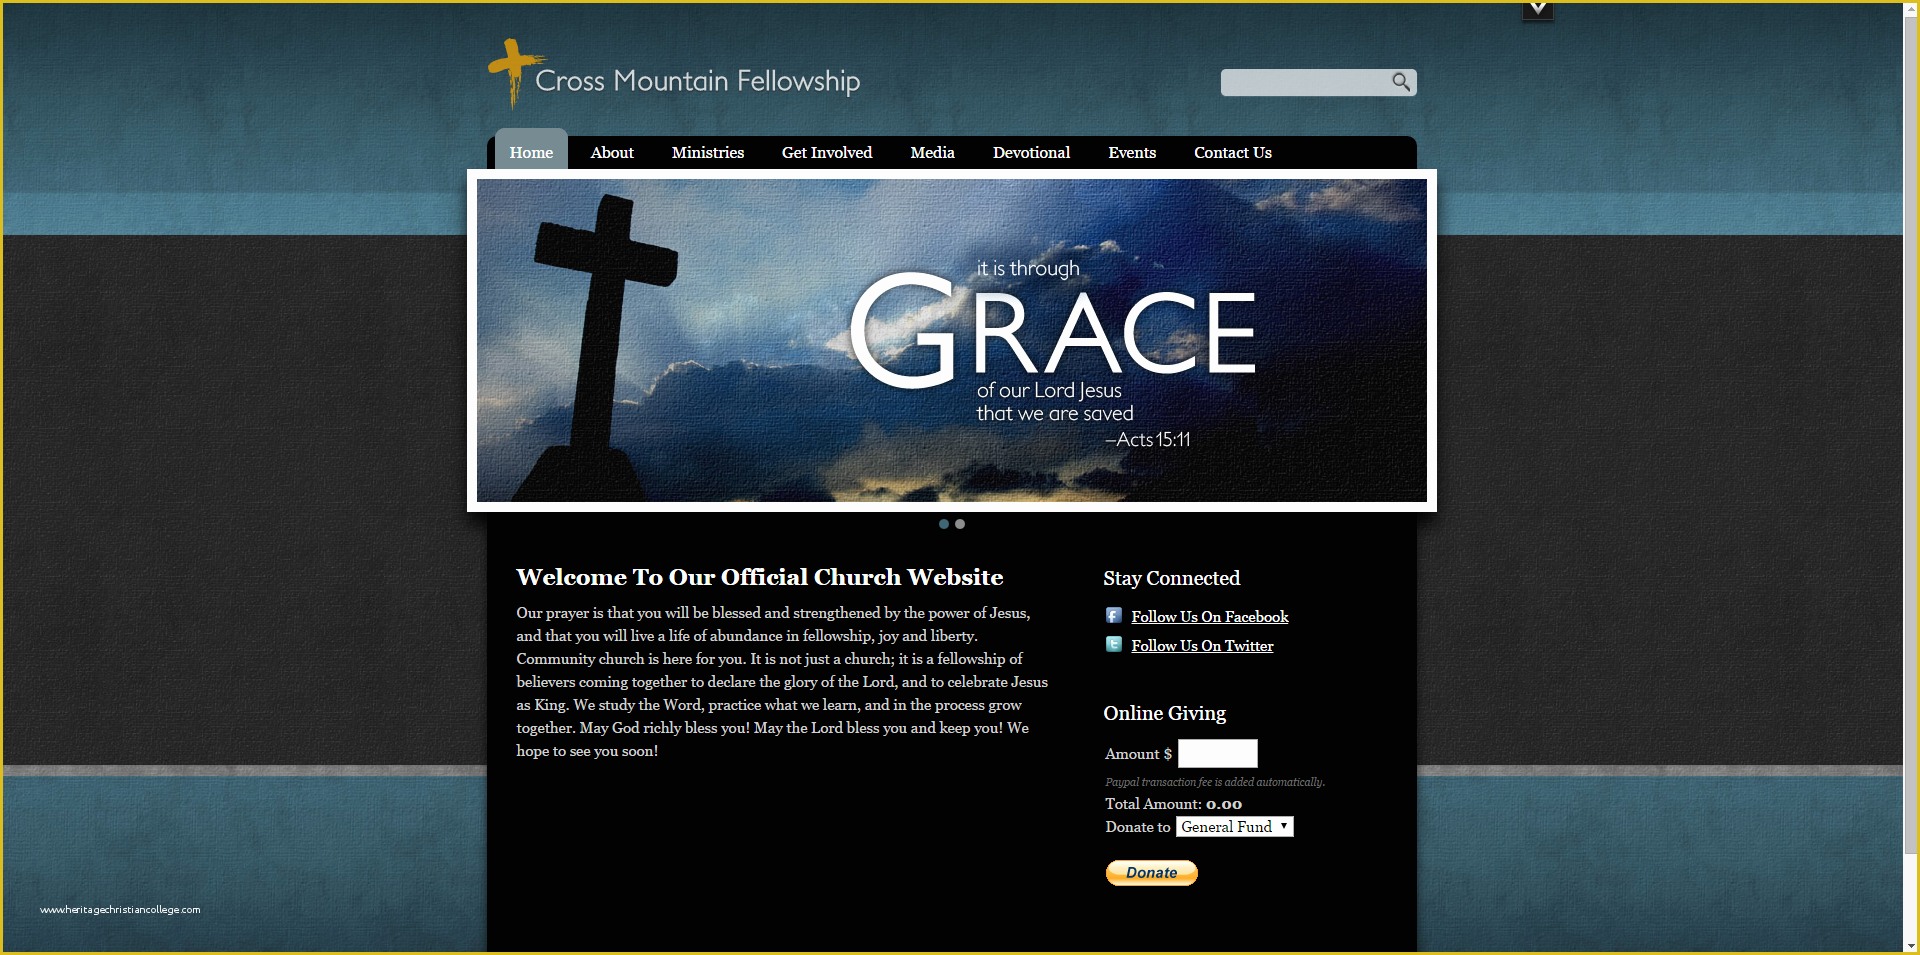 Christian Church Website Templates Free Download Of 30 Best Church Website Templates for Ministry and Outreach